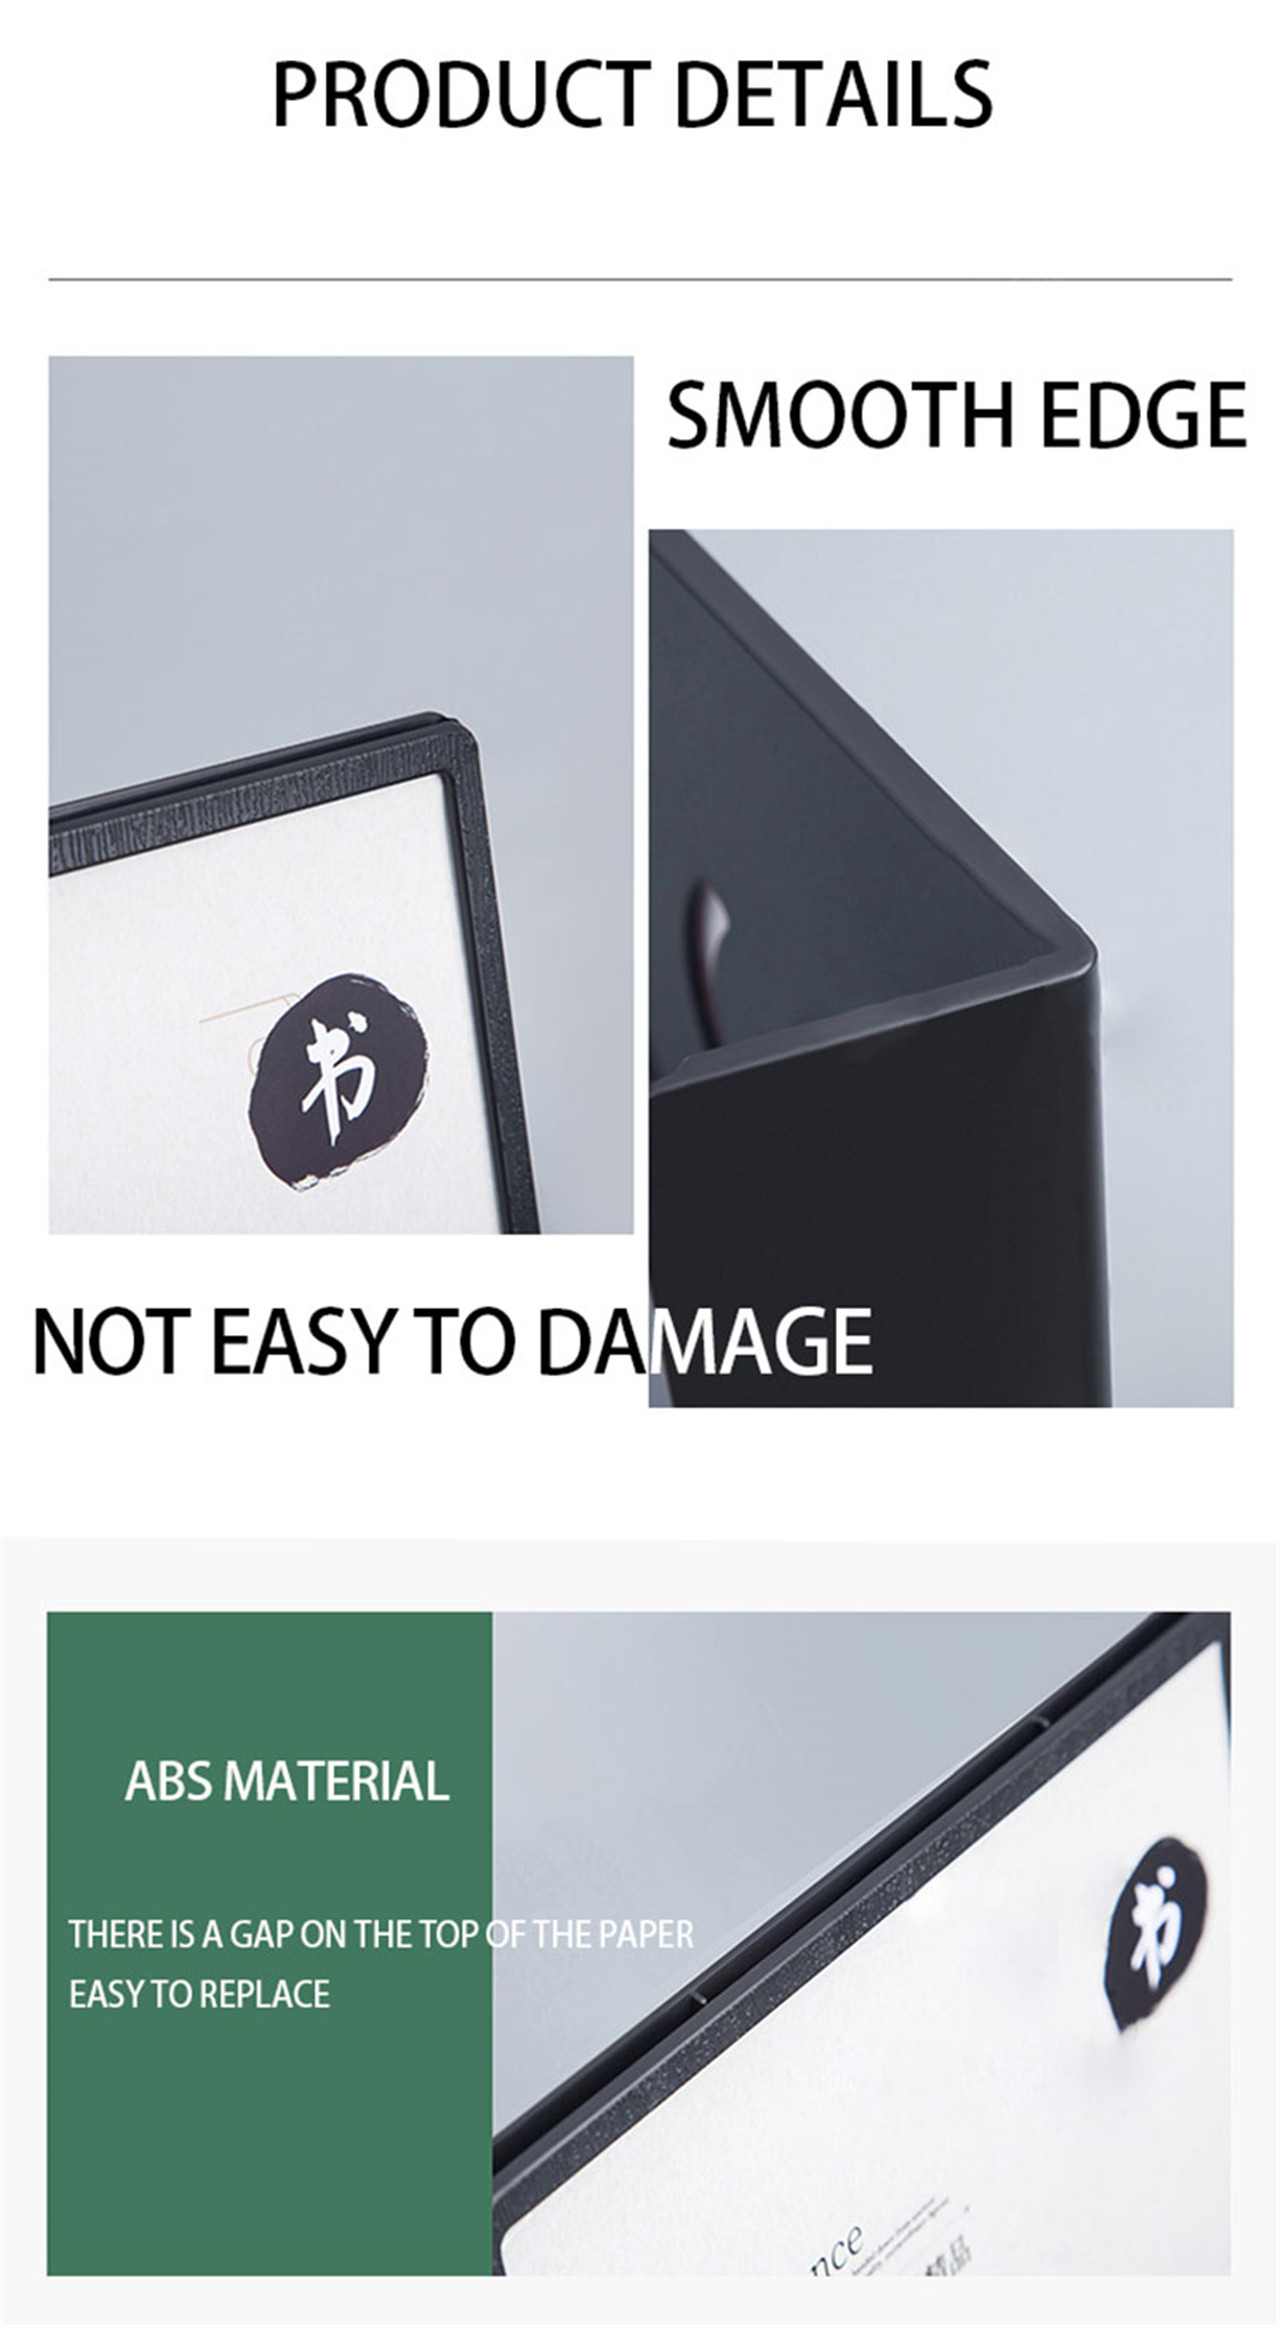 A4A5 Dubbelzijdig Helder Acryl met Base Desktop Teller Poster Teken Houder Menu Display Stand (6)